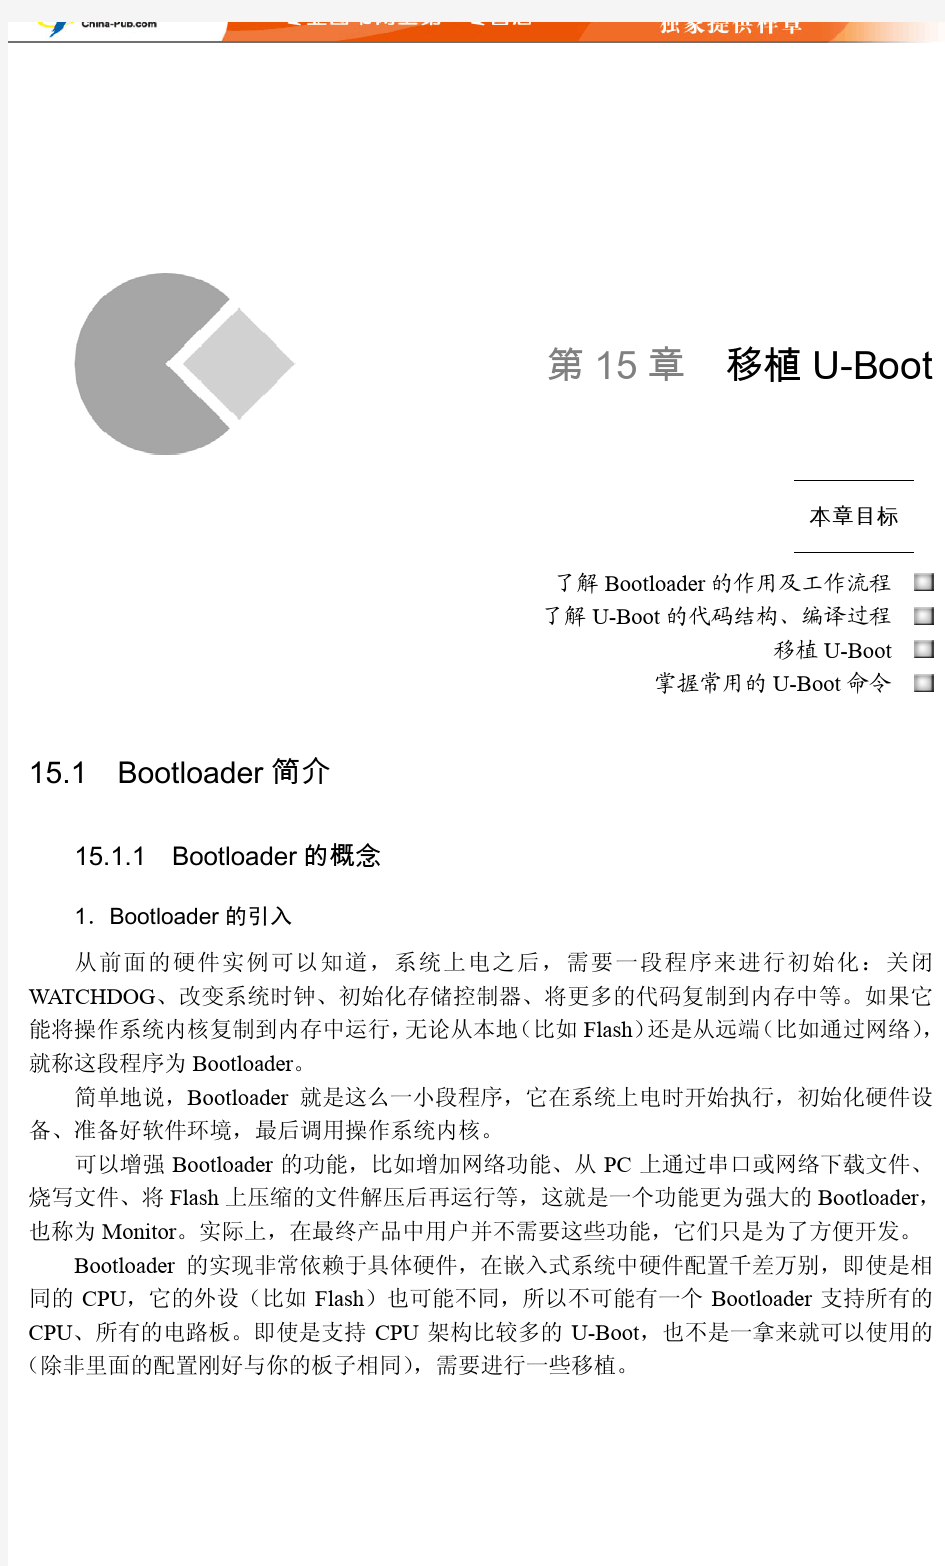 bootloader与u-boot移植